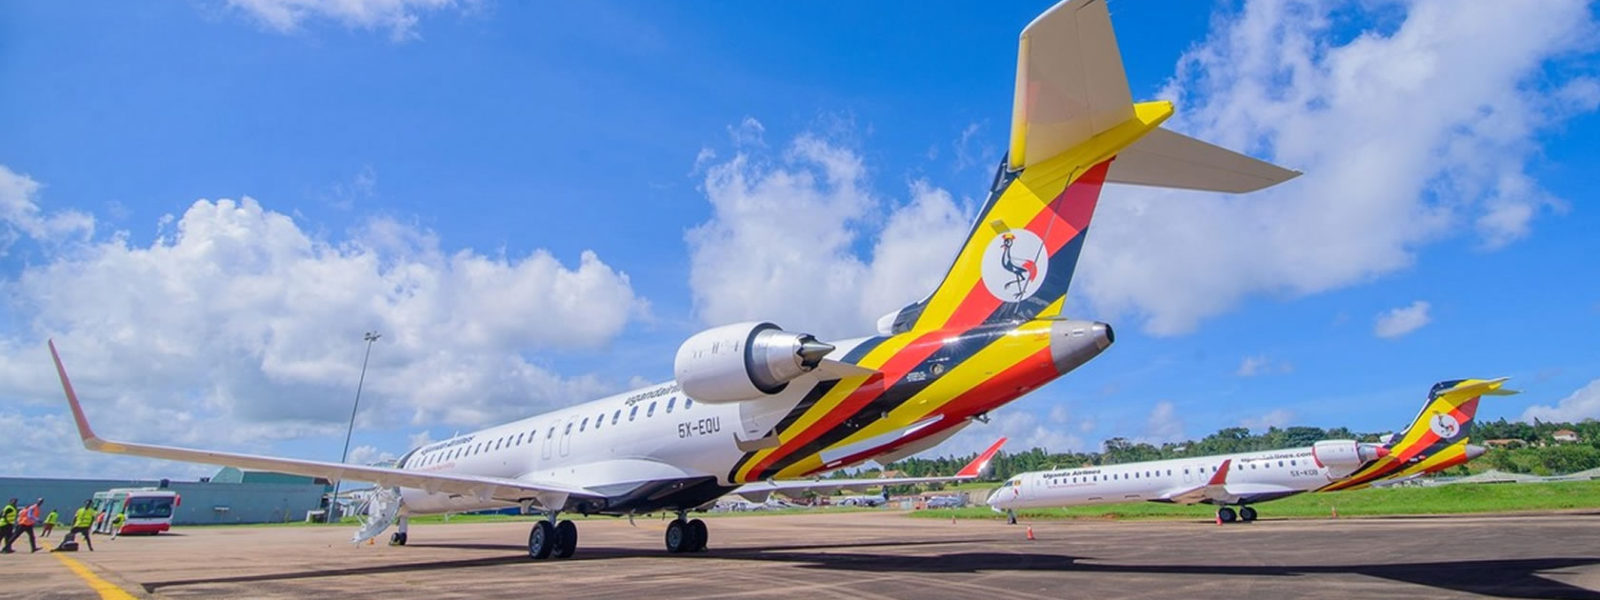 uganda travel entry requirements